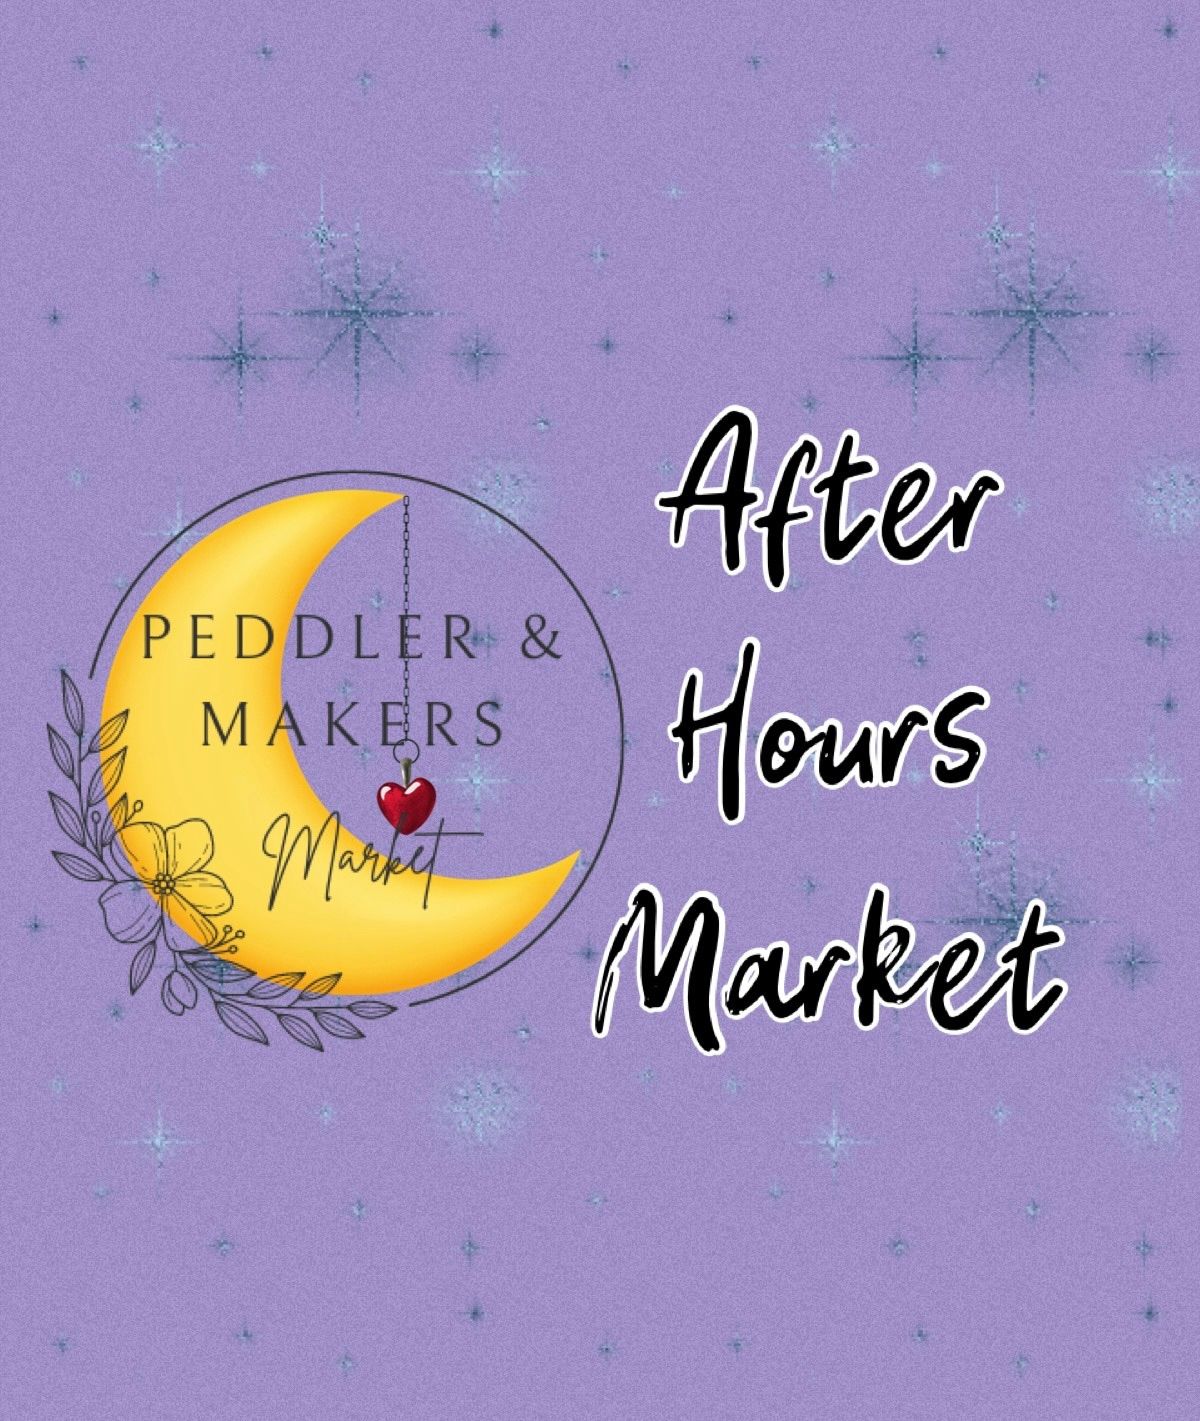 After Hours Market